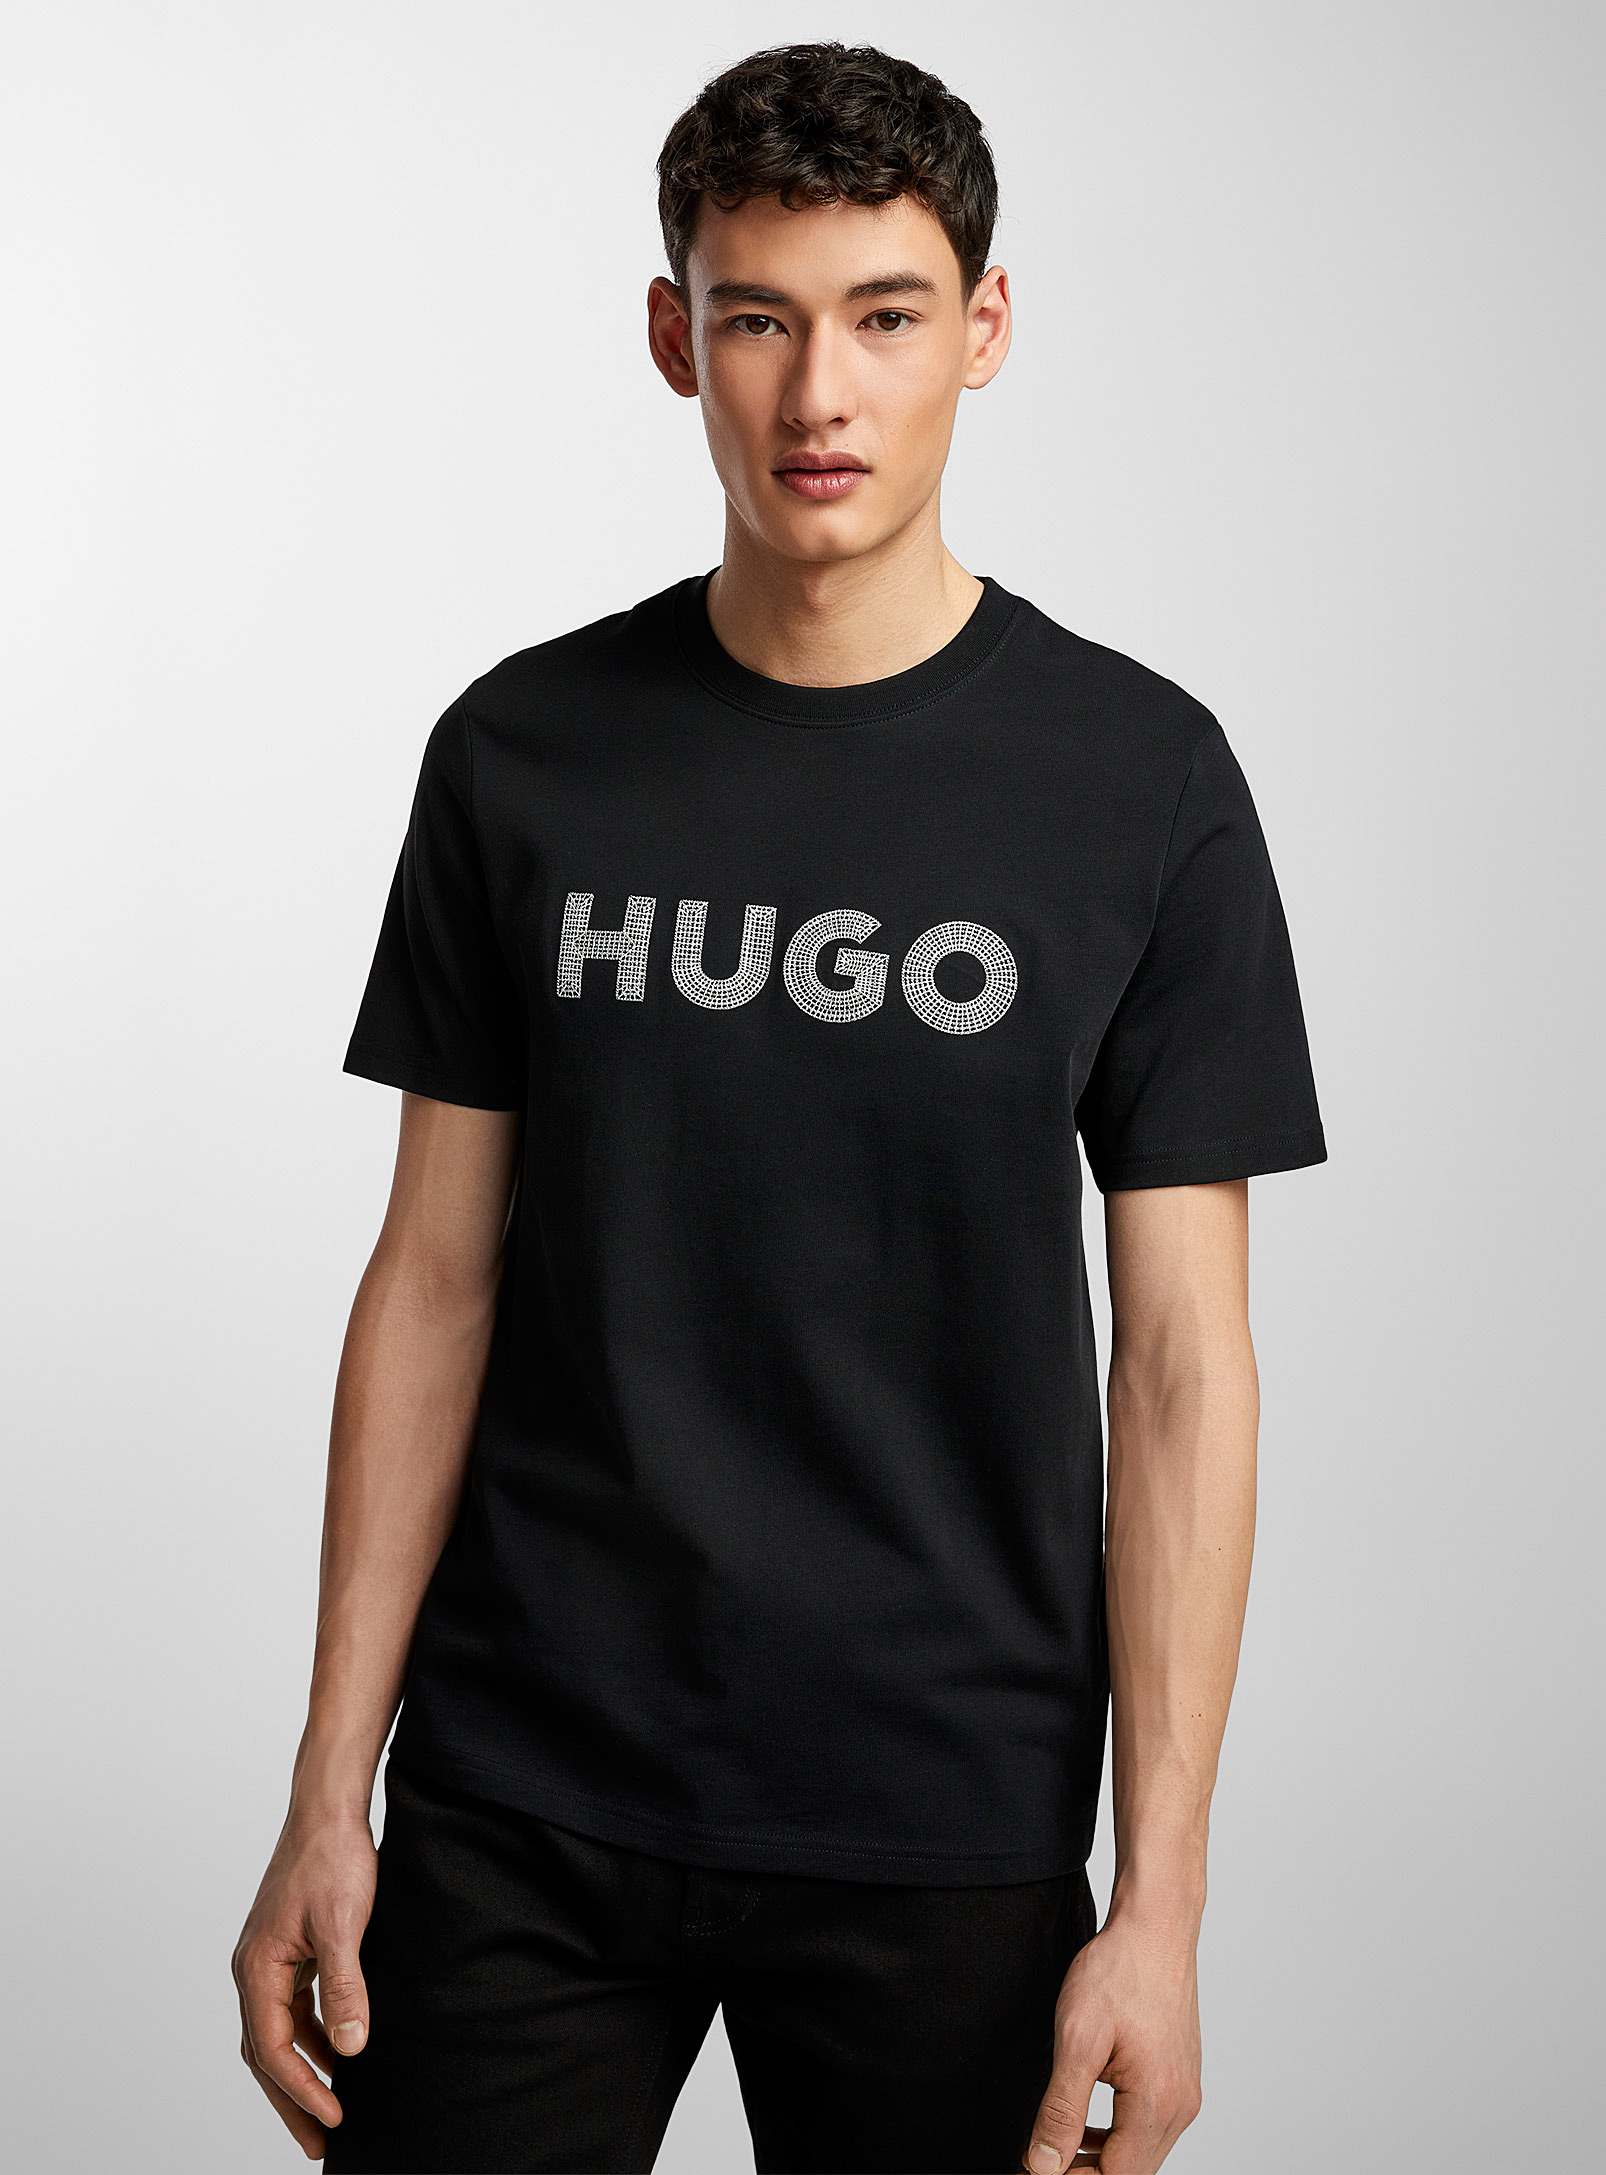 HUGO - Men's Drochet logo T-shirt